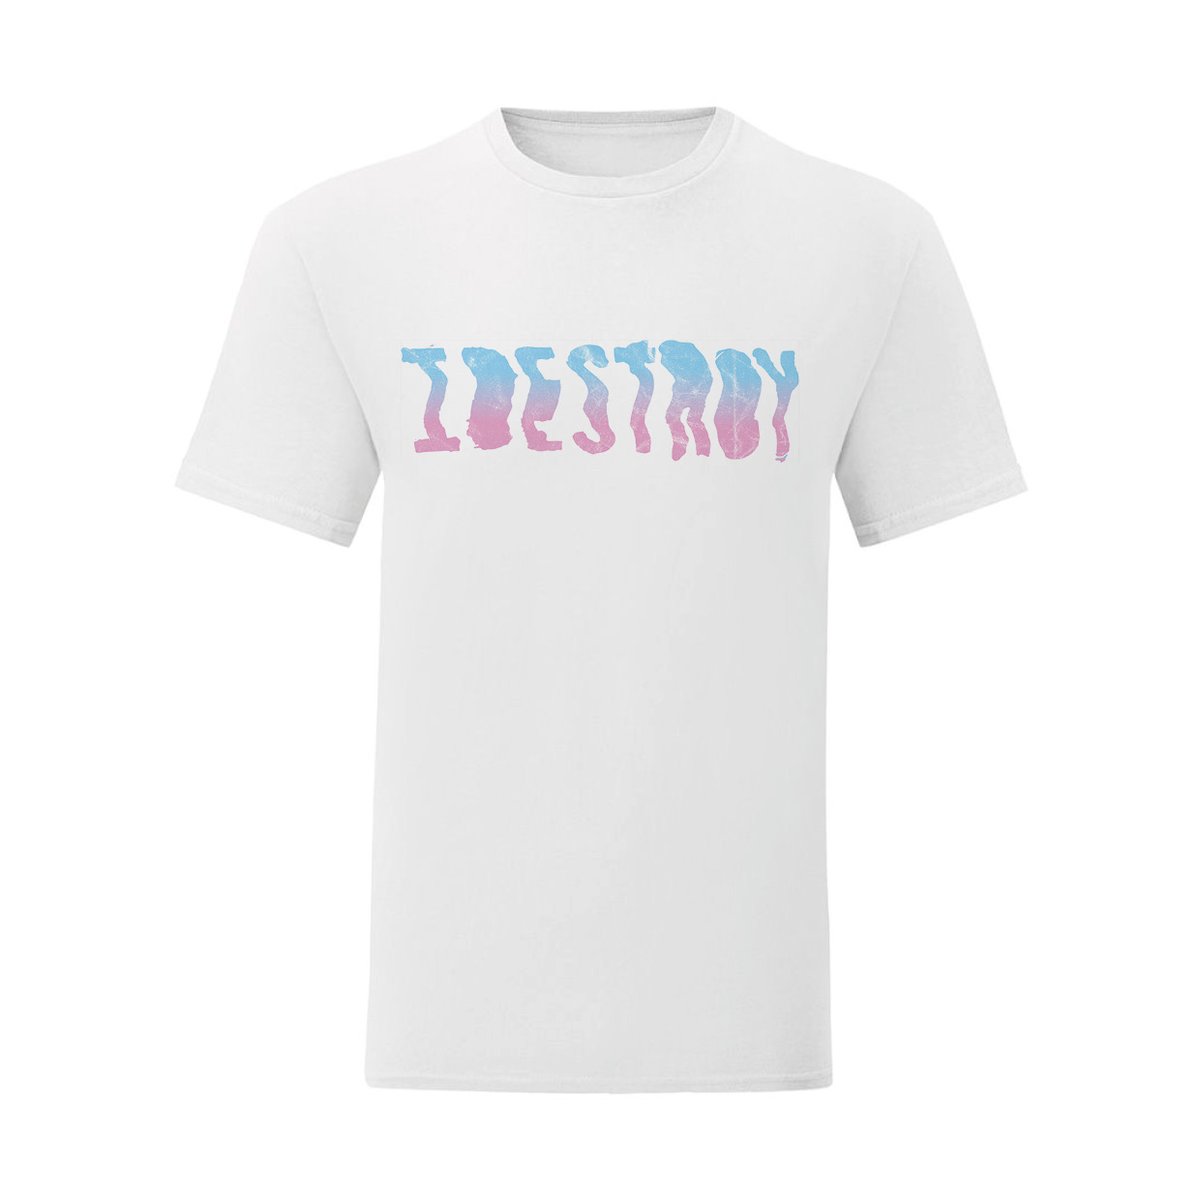 Image of IDestroy logo tshirt